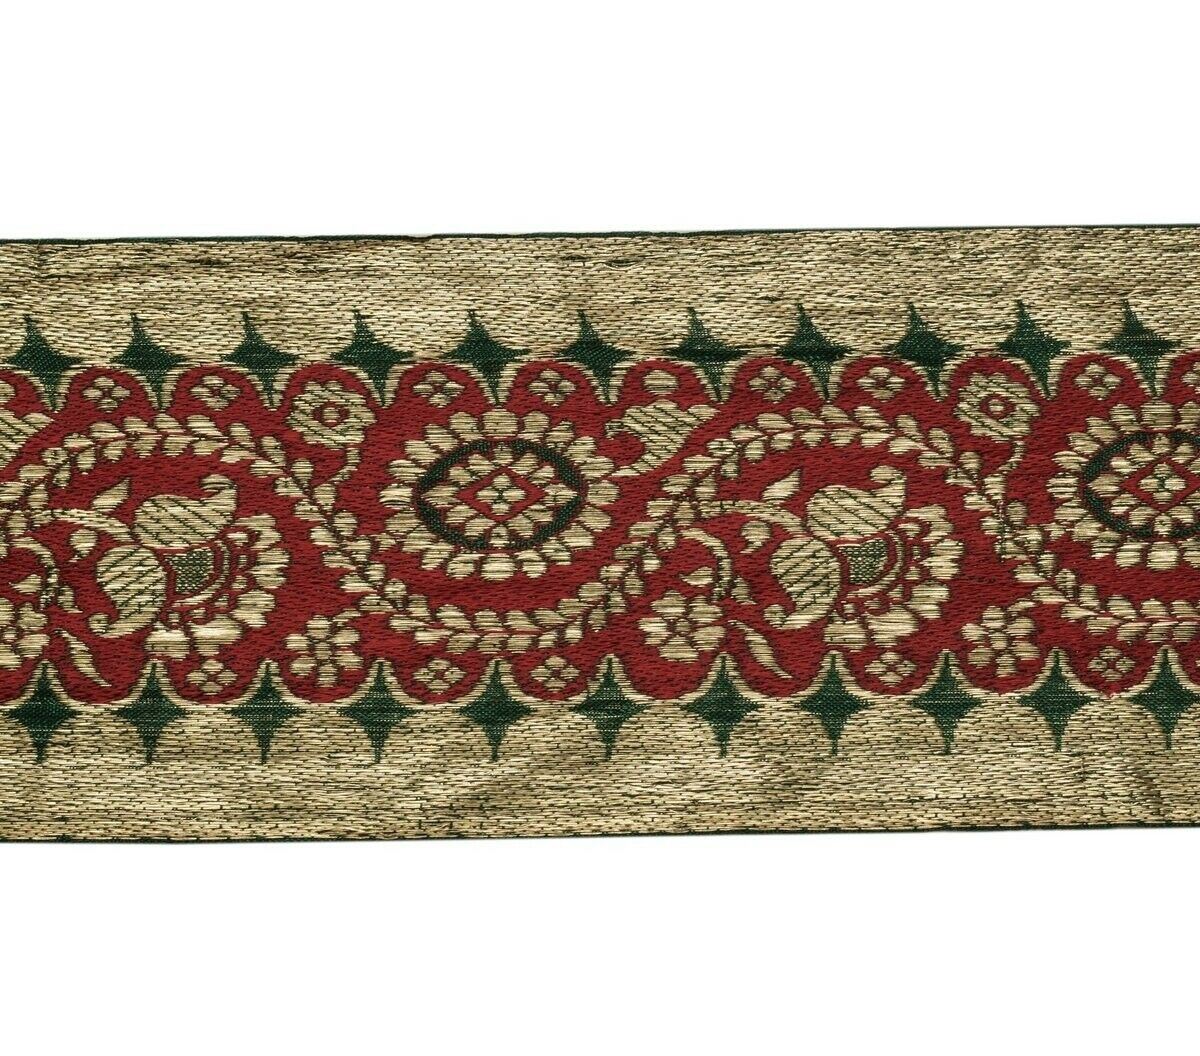 Vintage Sari Border Indian Craft Trim Zari & Resam Woven Green Maroon Sew Lace